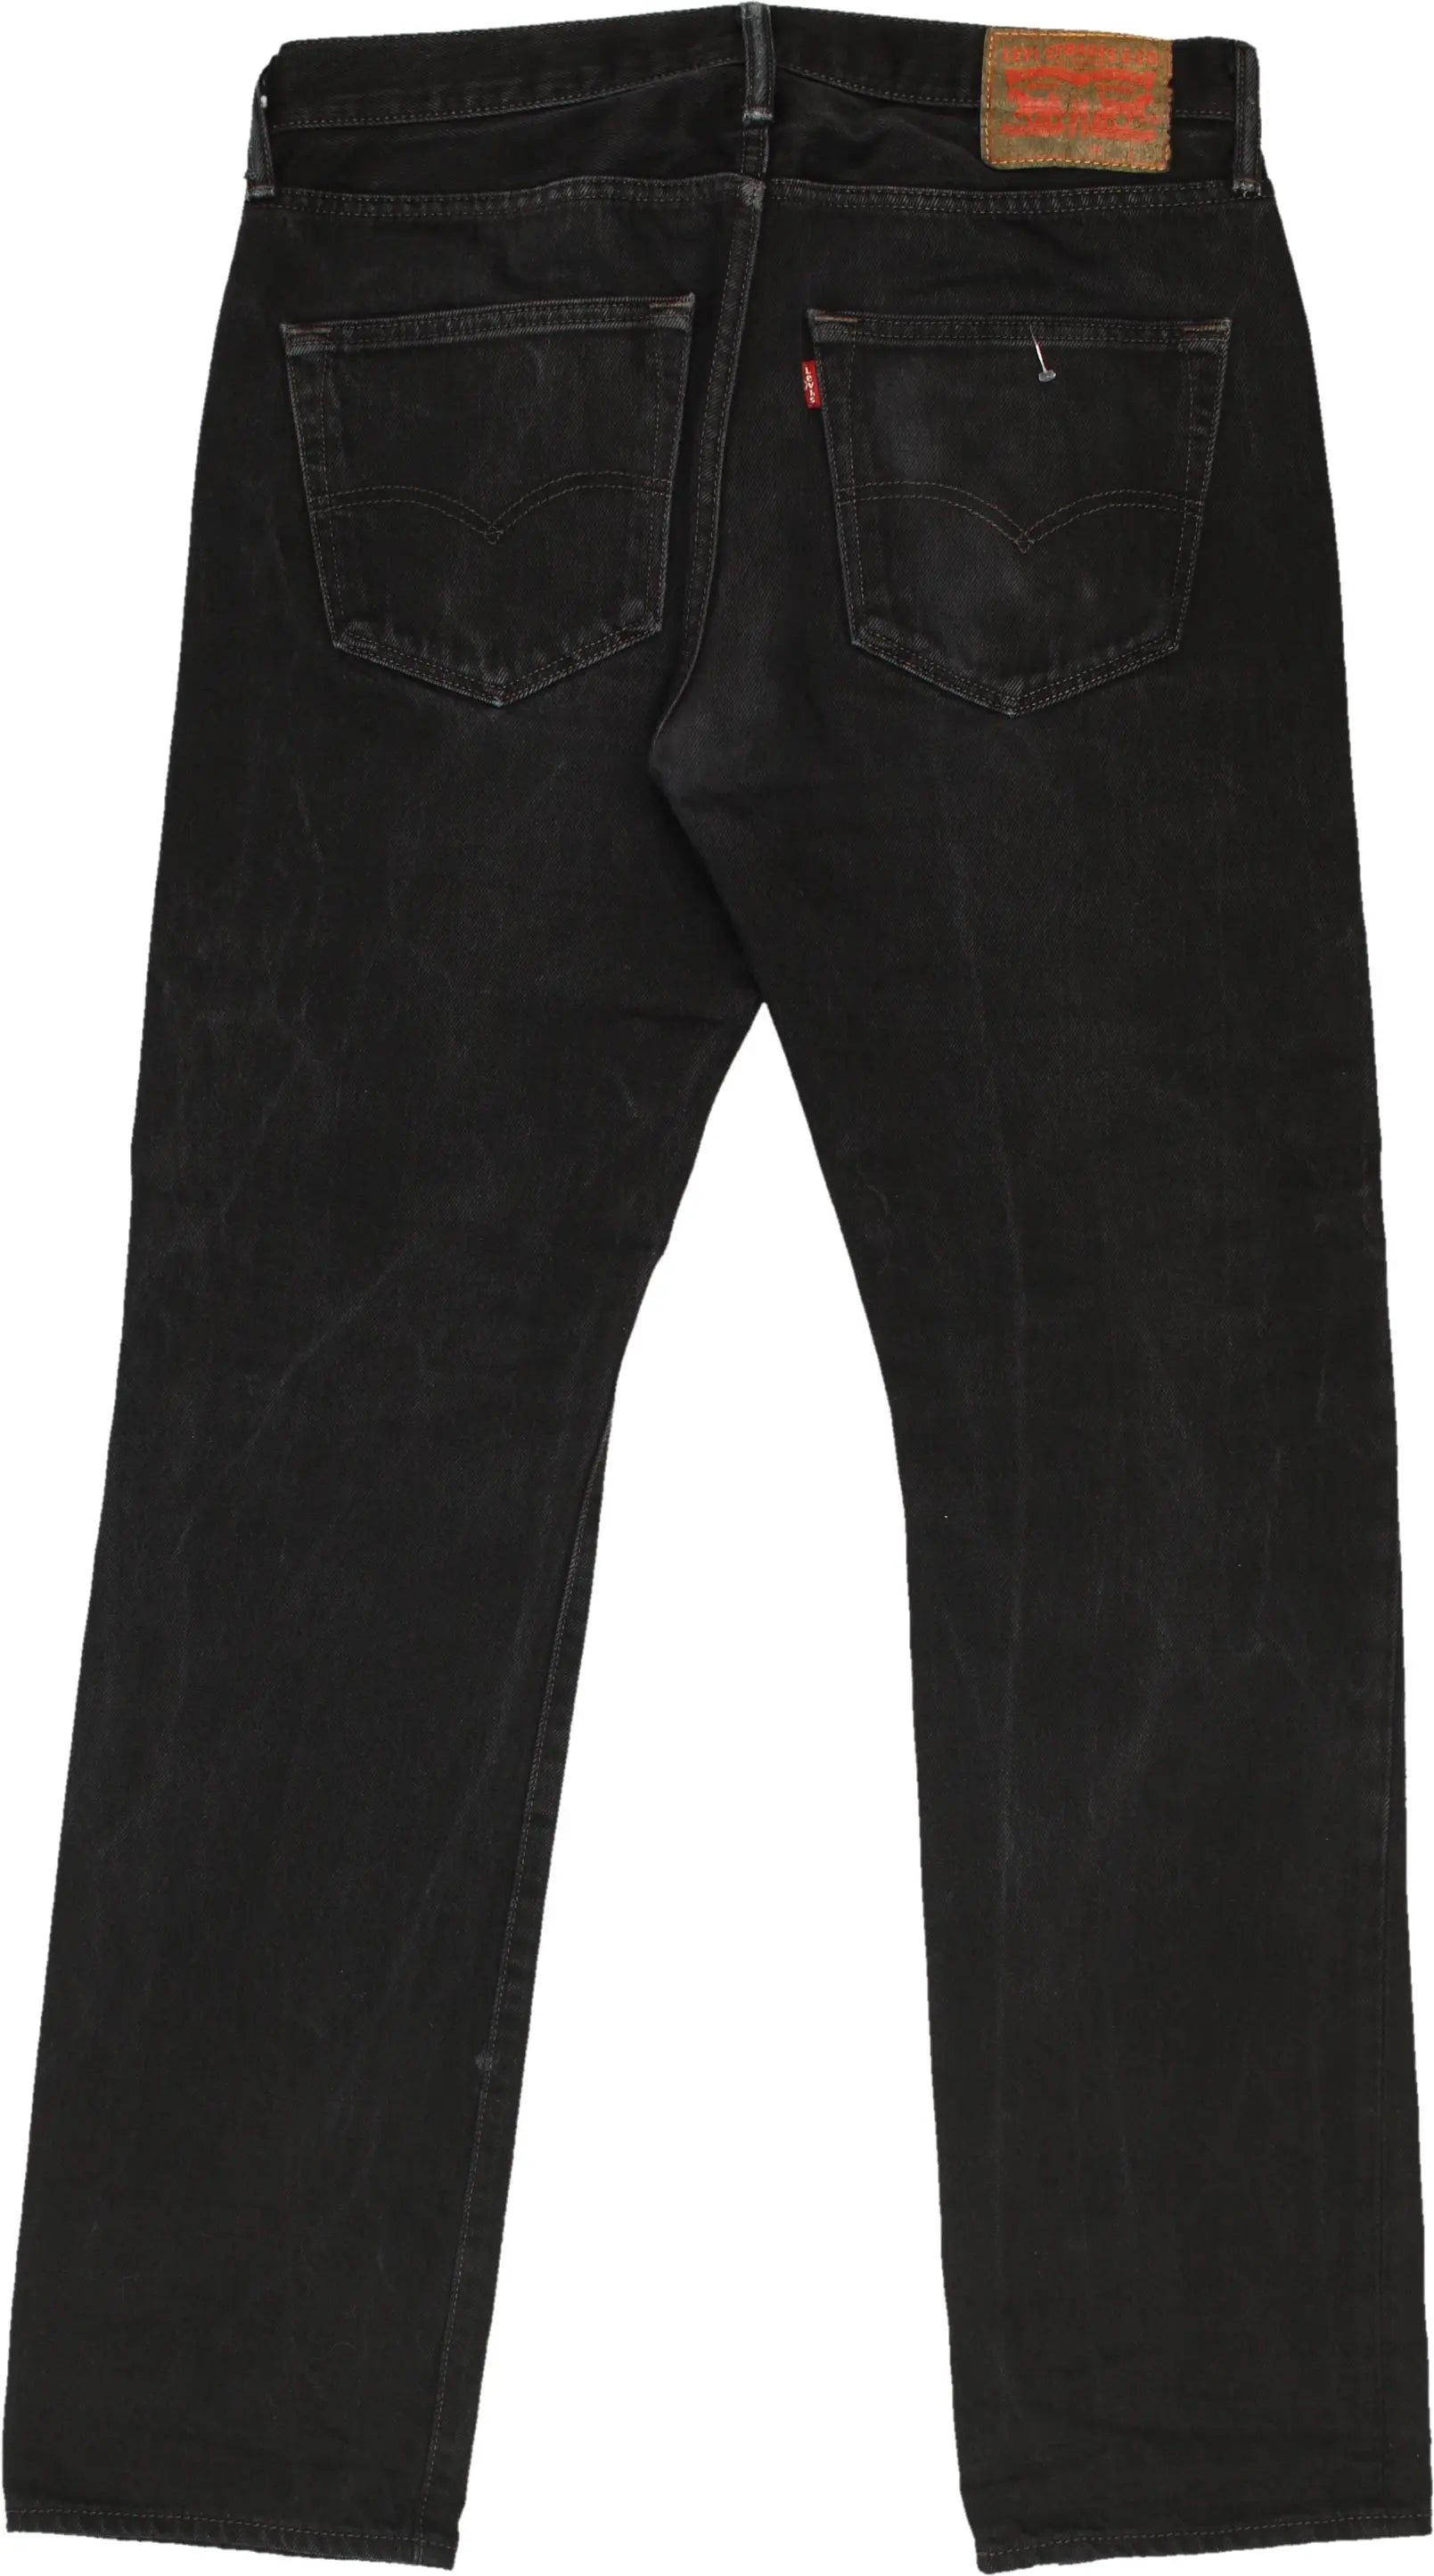 Levi's - Levi's Slim Fit Jeans- ThriftTale.com - Vintage and second handclothing